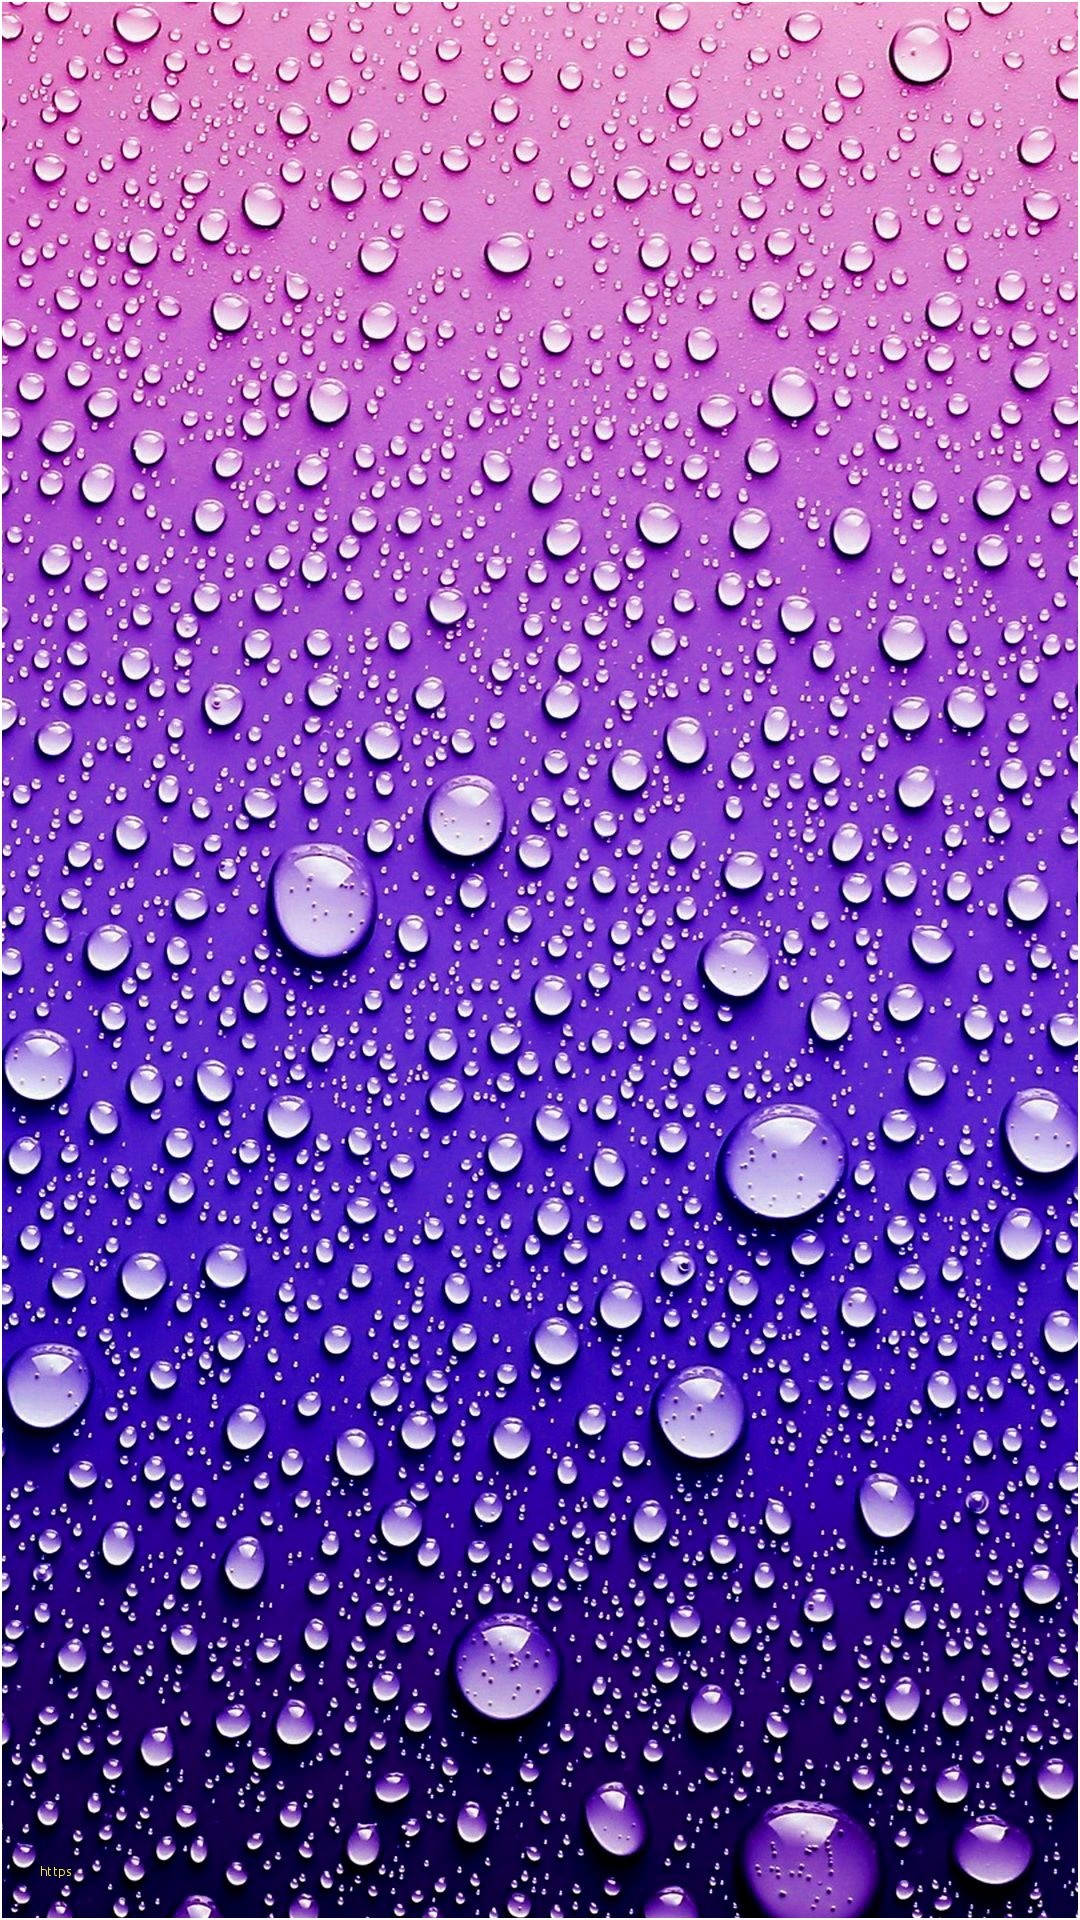 Cute Instagram Water Drops Background Wallpaper